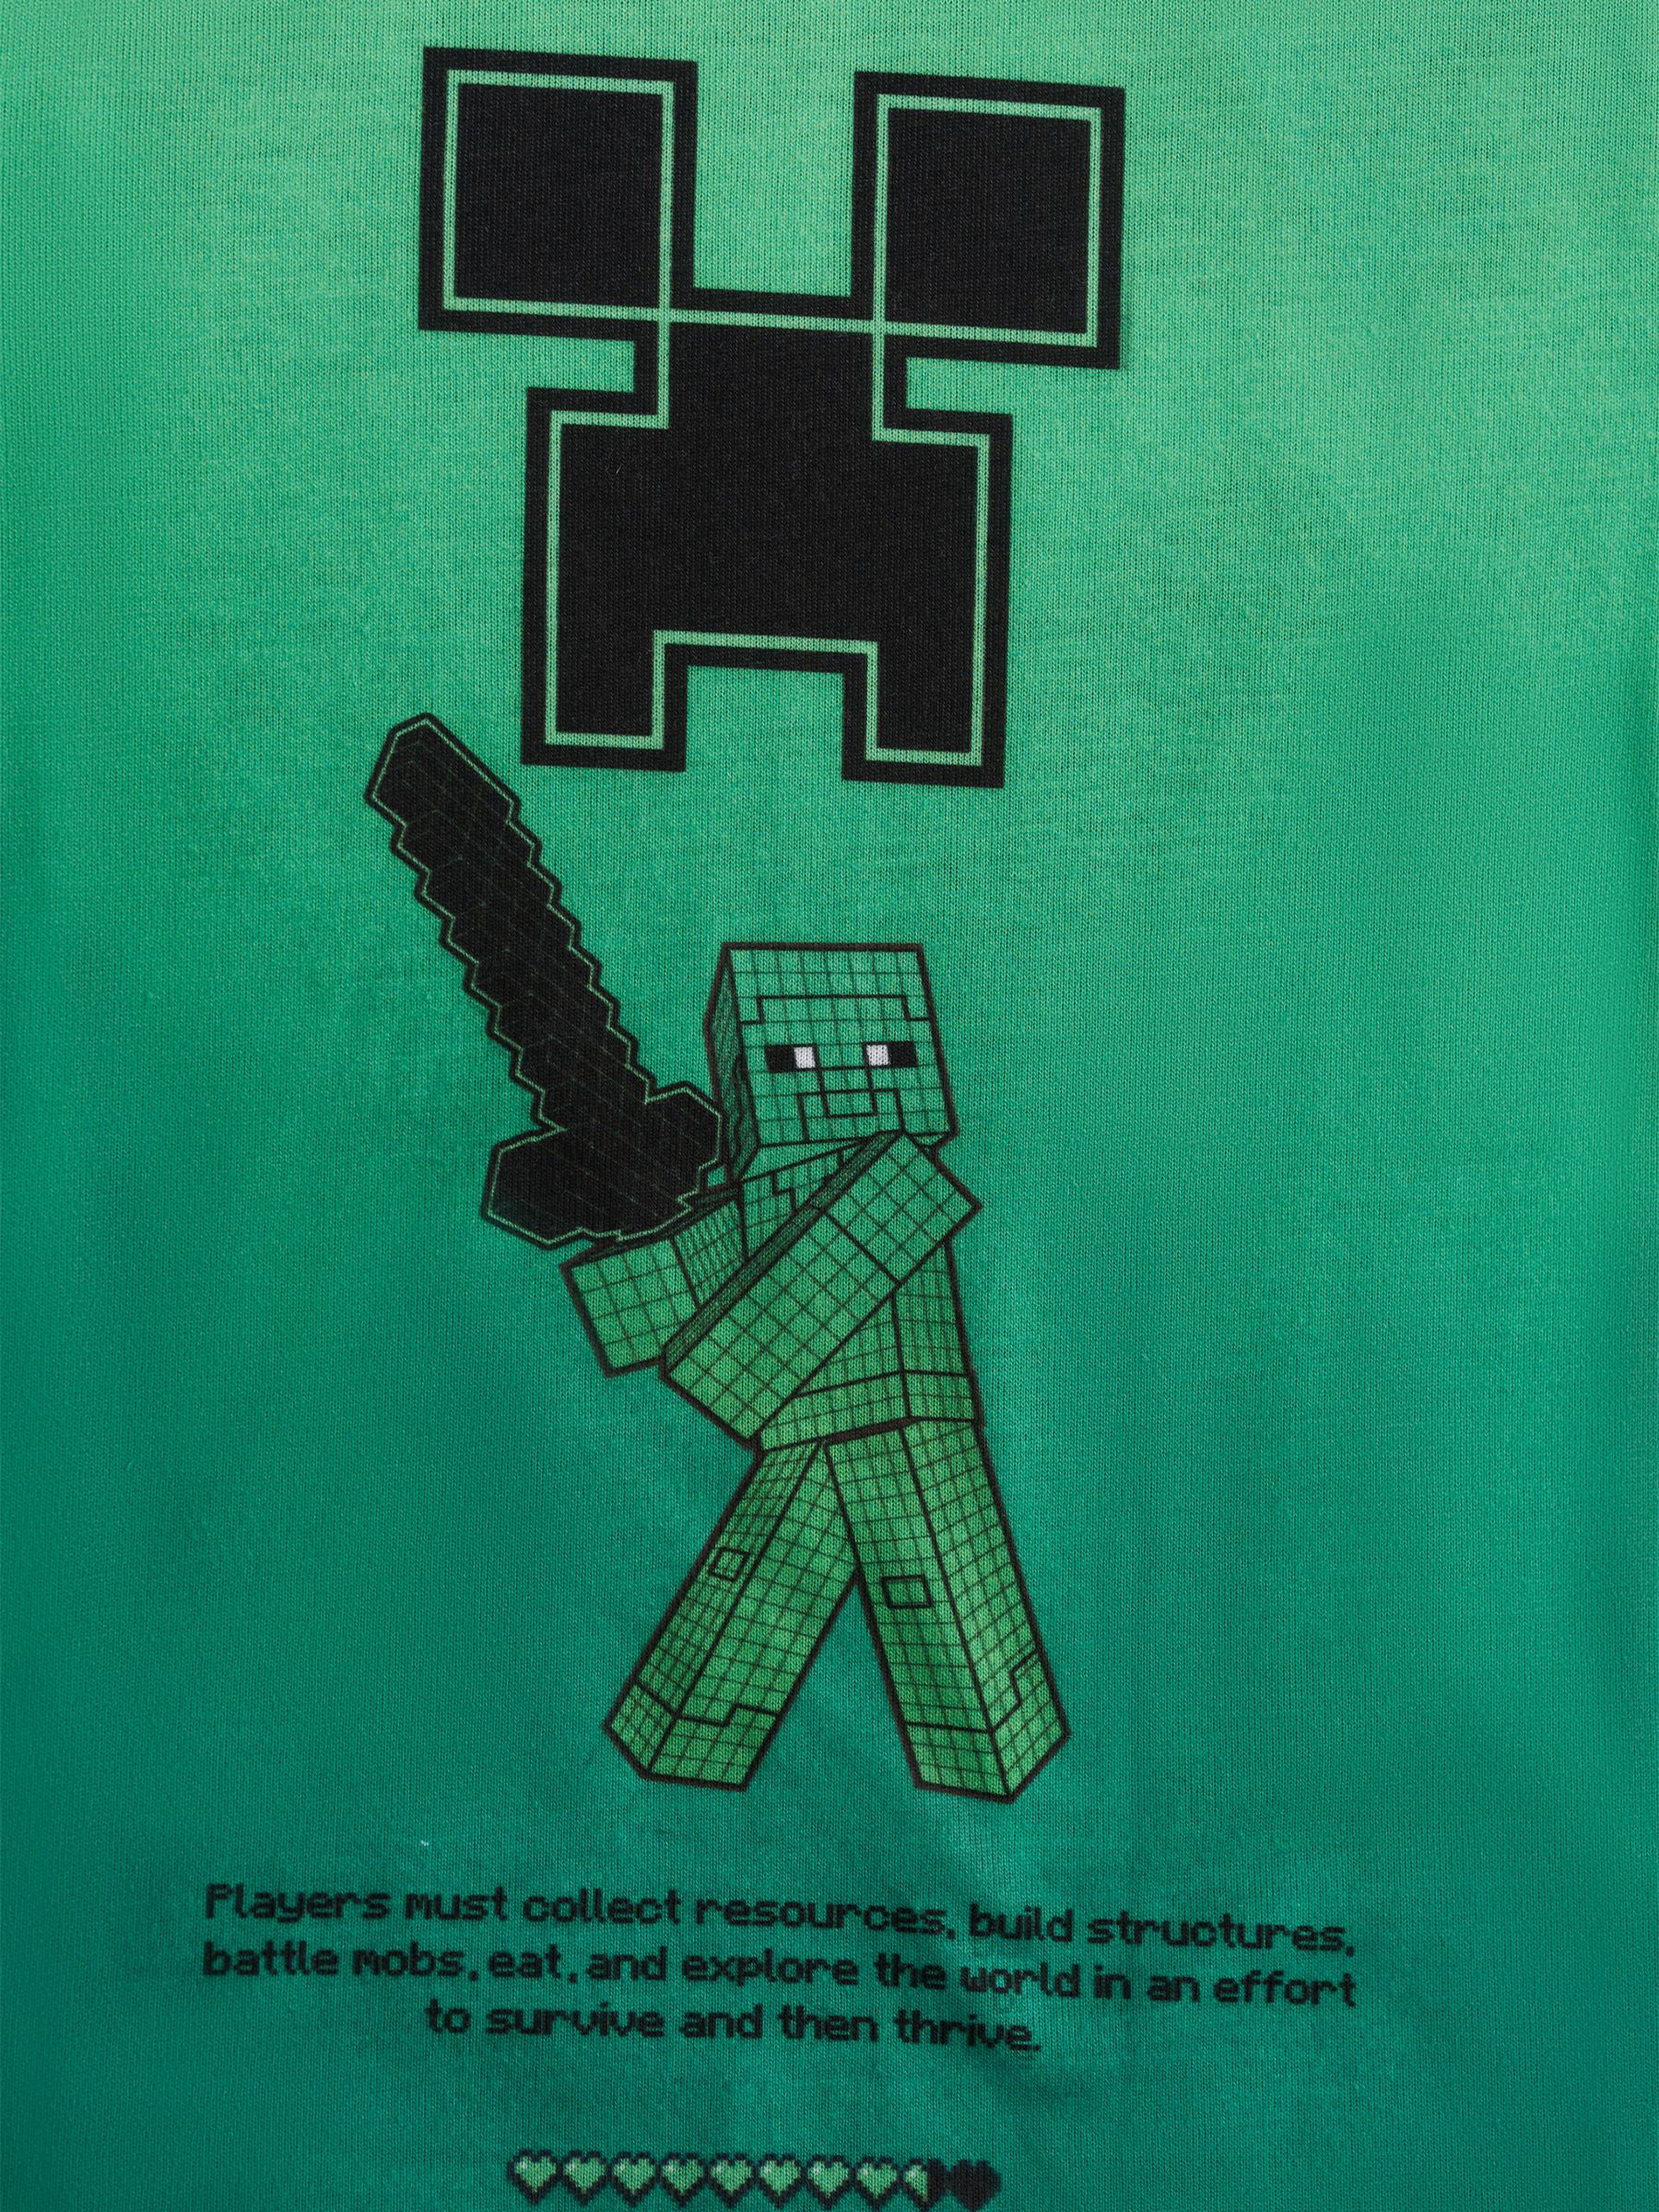 Buy Angel & Rocket Kids'  Minecraft Graphic T-Shirt, Green Online at johnlewis.com